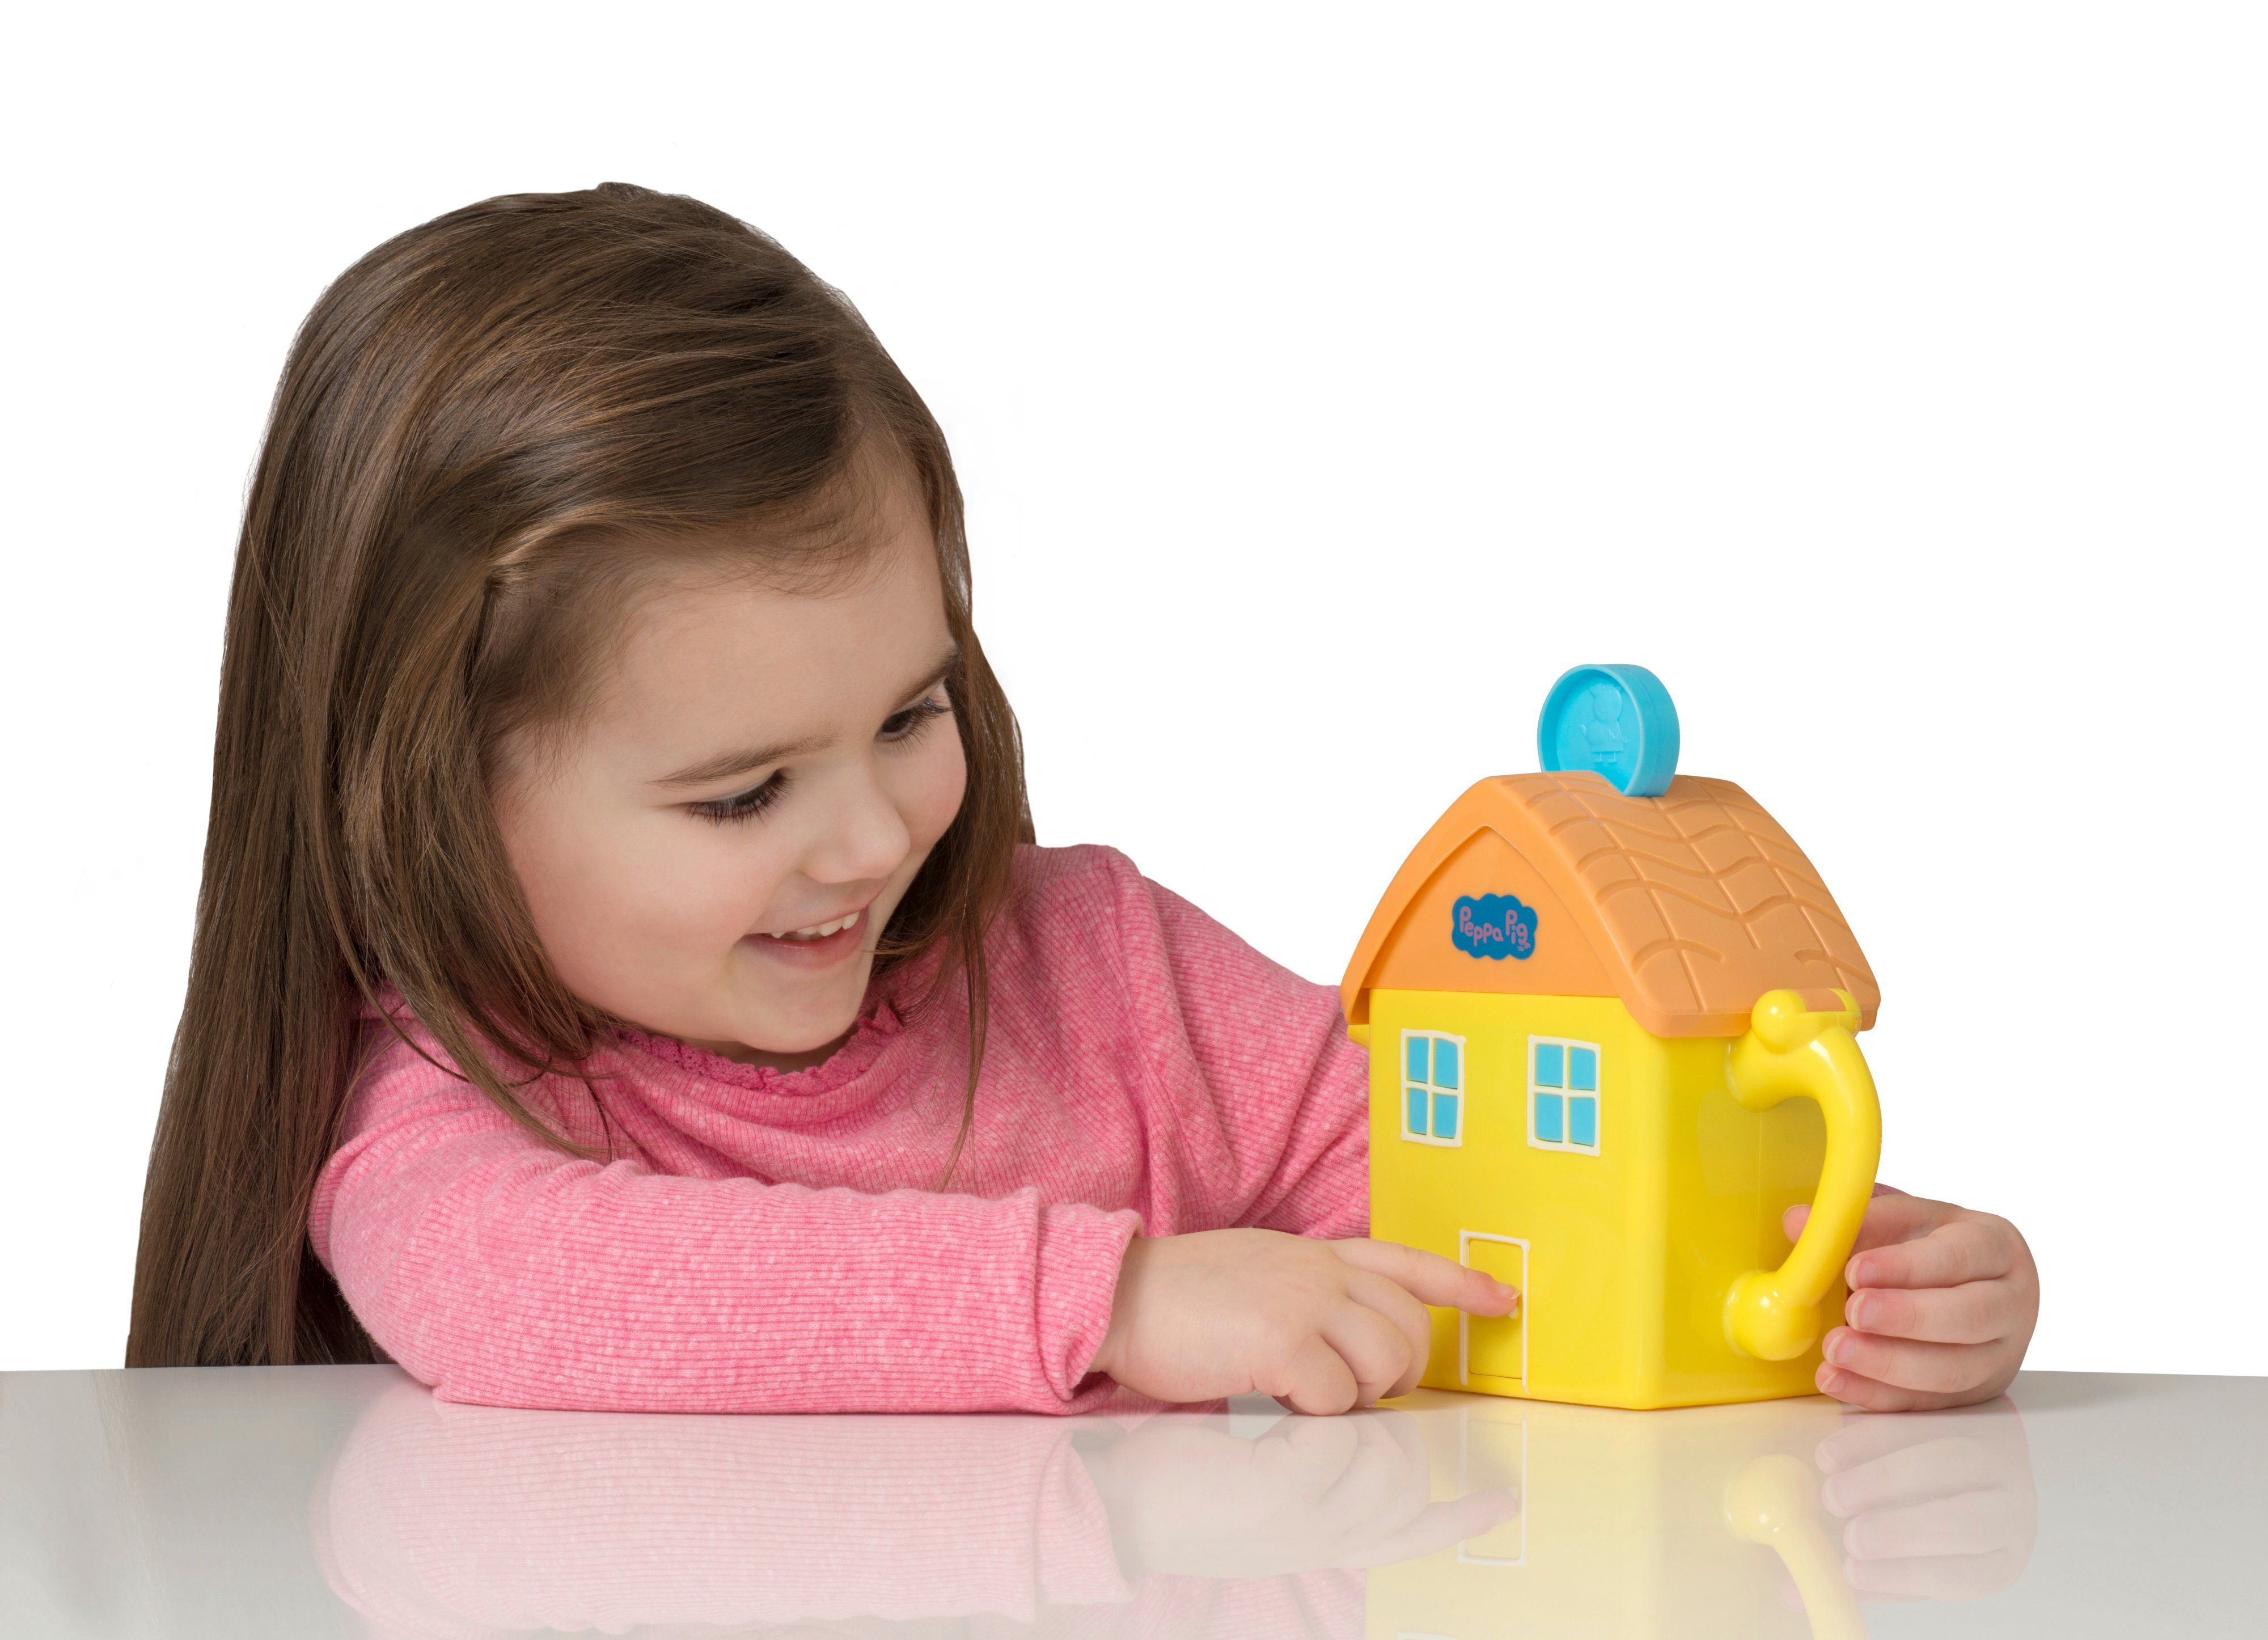 House Peppa Lernspielzeug Set Vago®-Toys Tea Waiky Pig